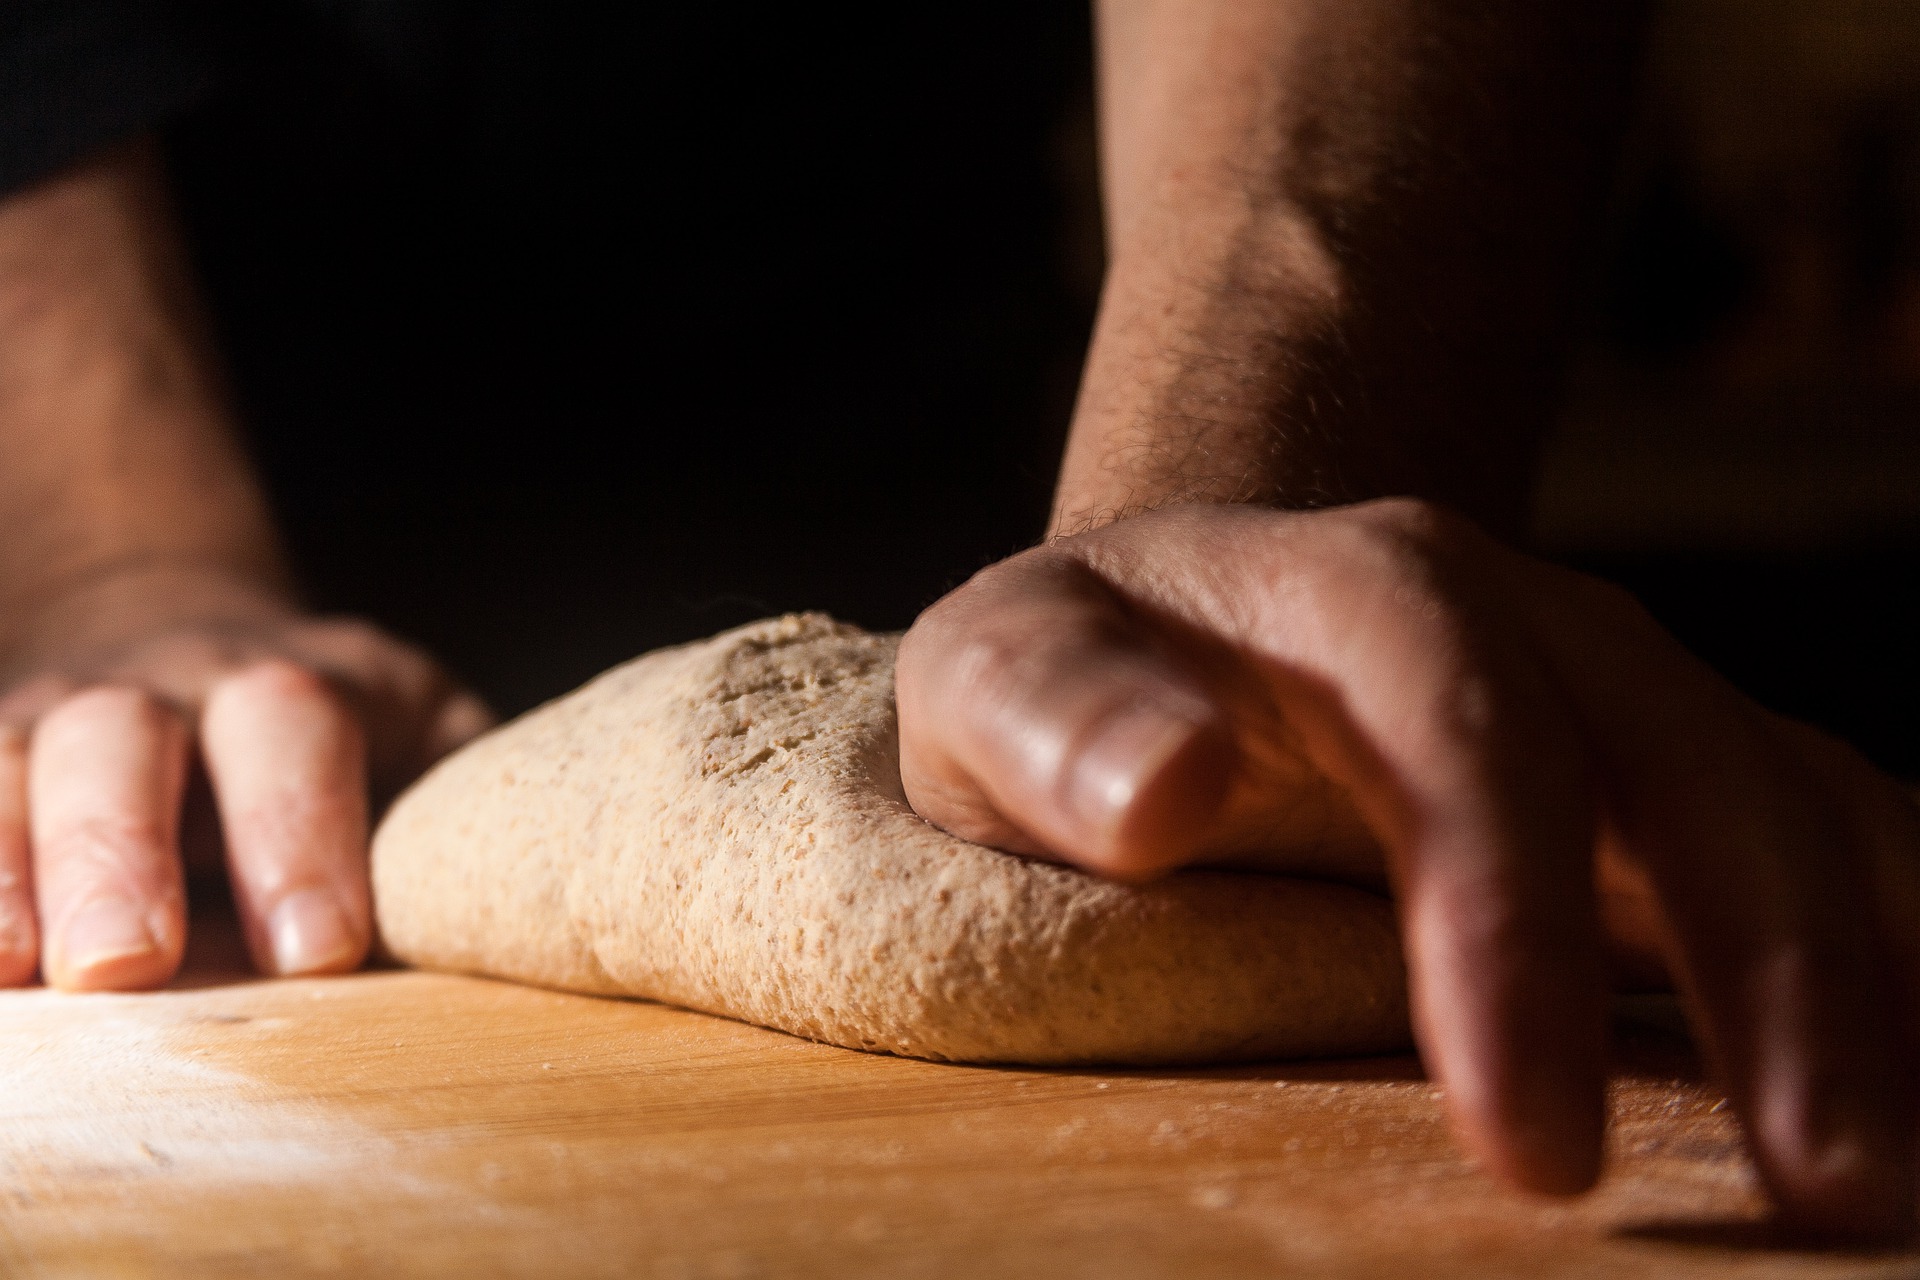 Hands kneading dough.